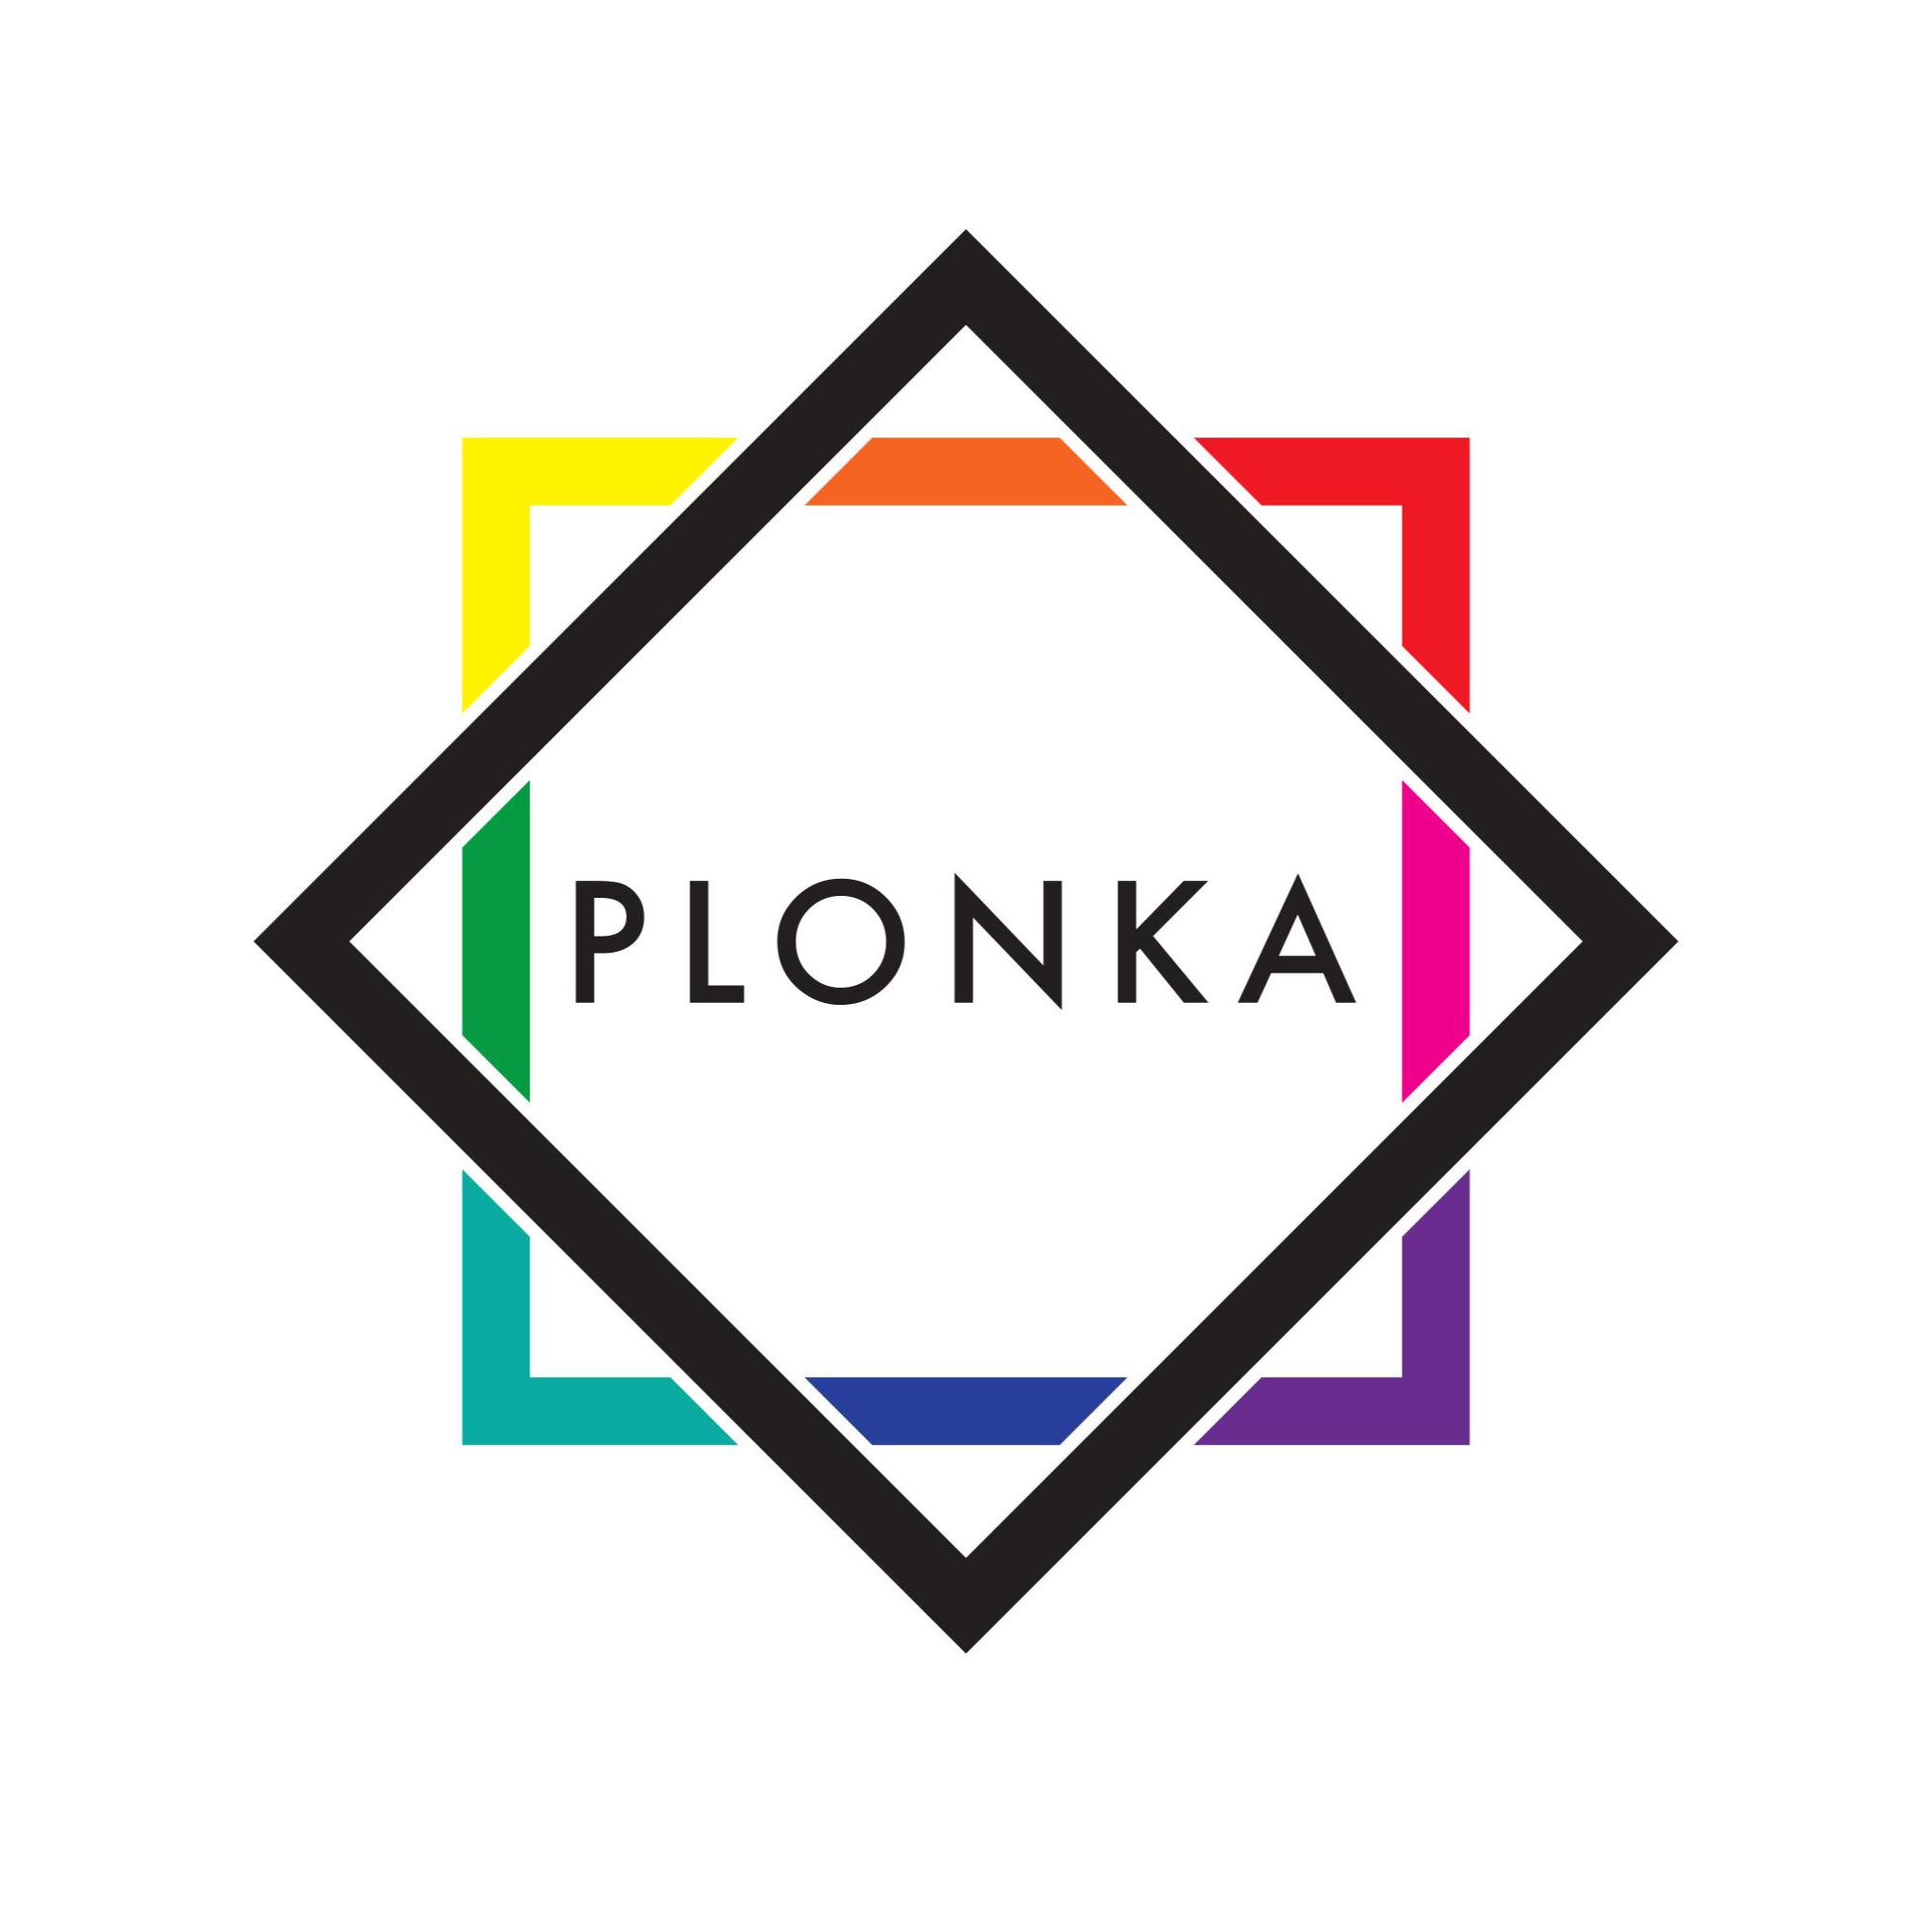 Plonka Malerfachbetrieb Inh. Krzysztof Plonka in Lohne in Oldenburg - Logo